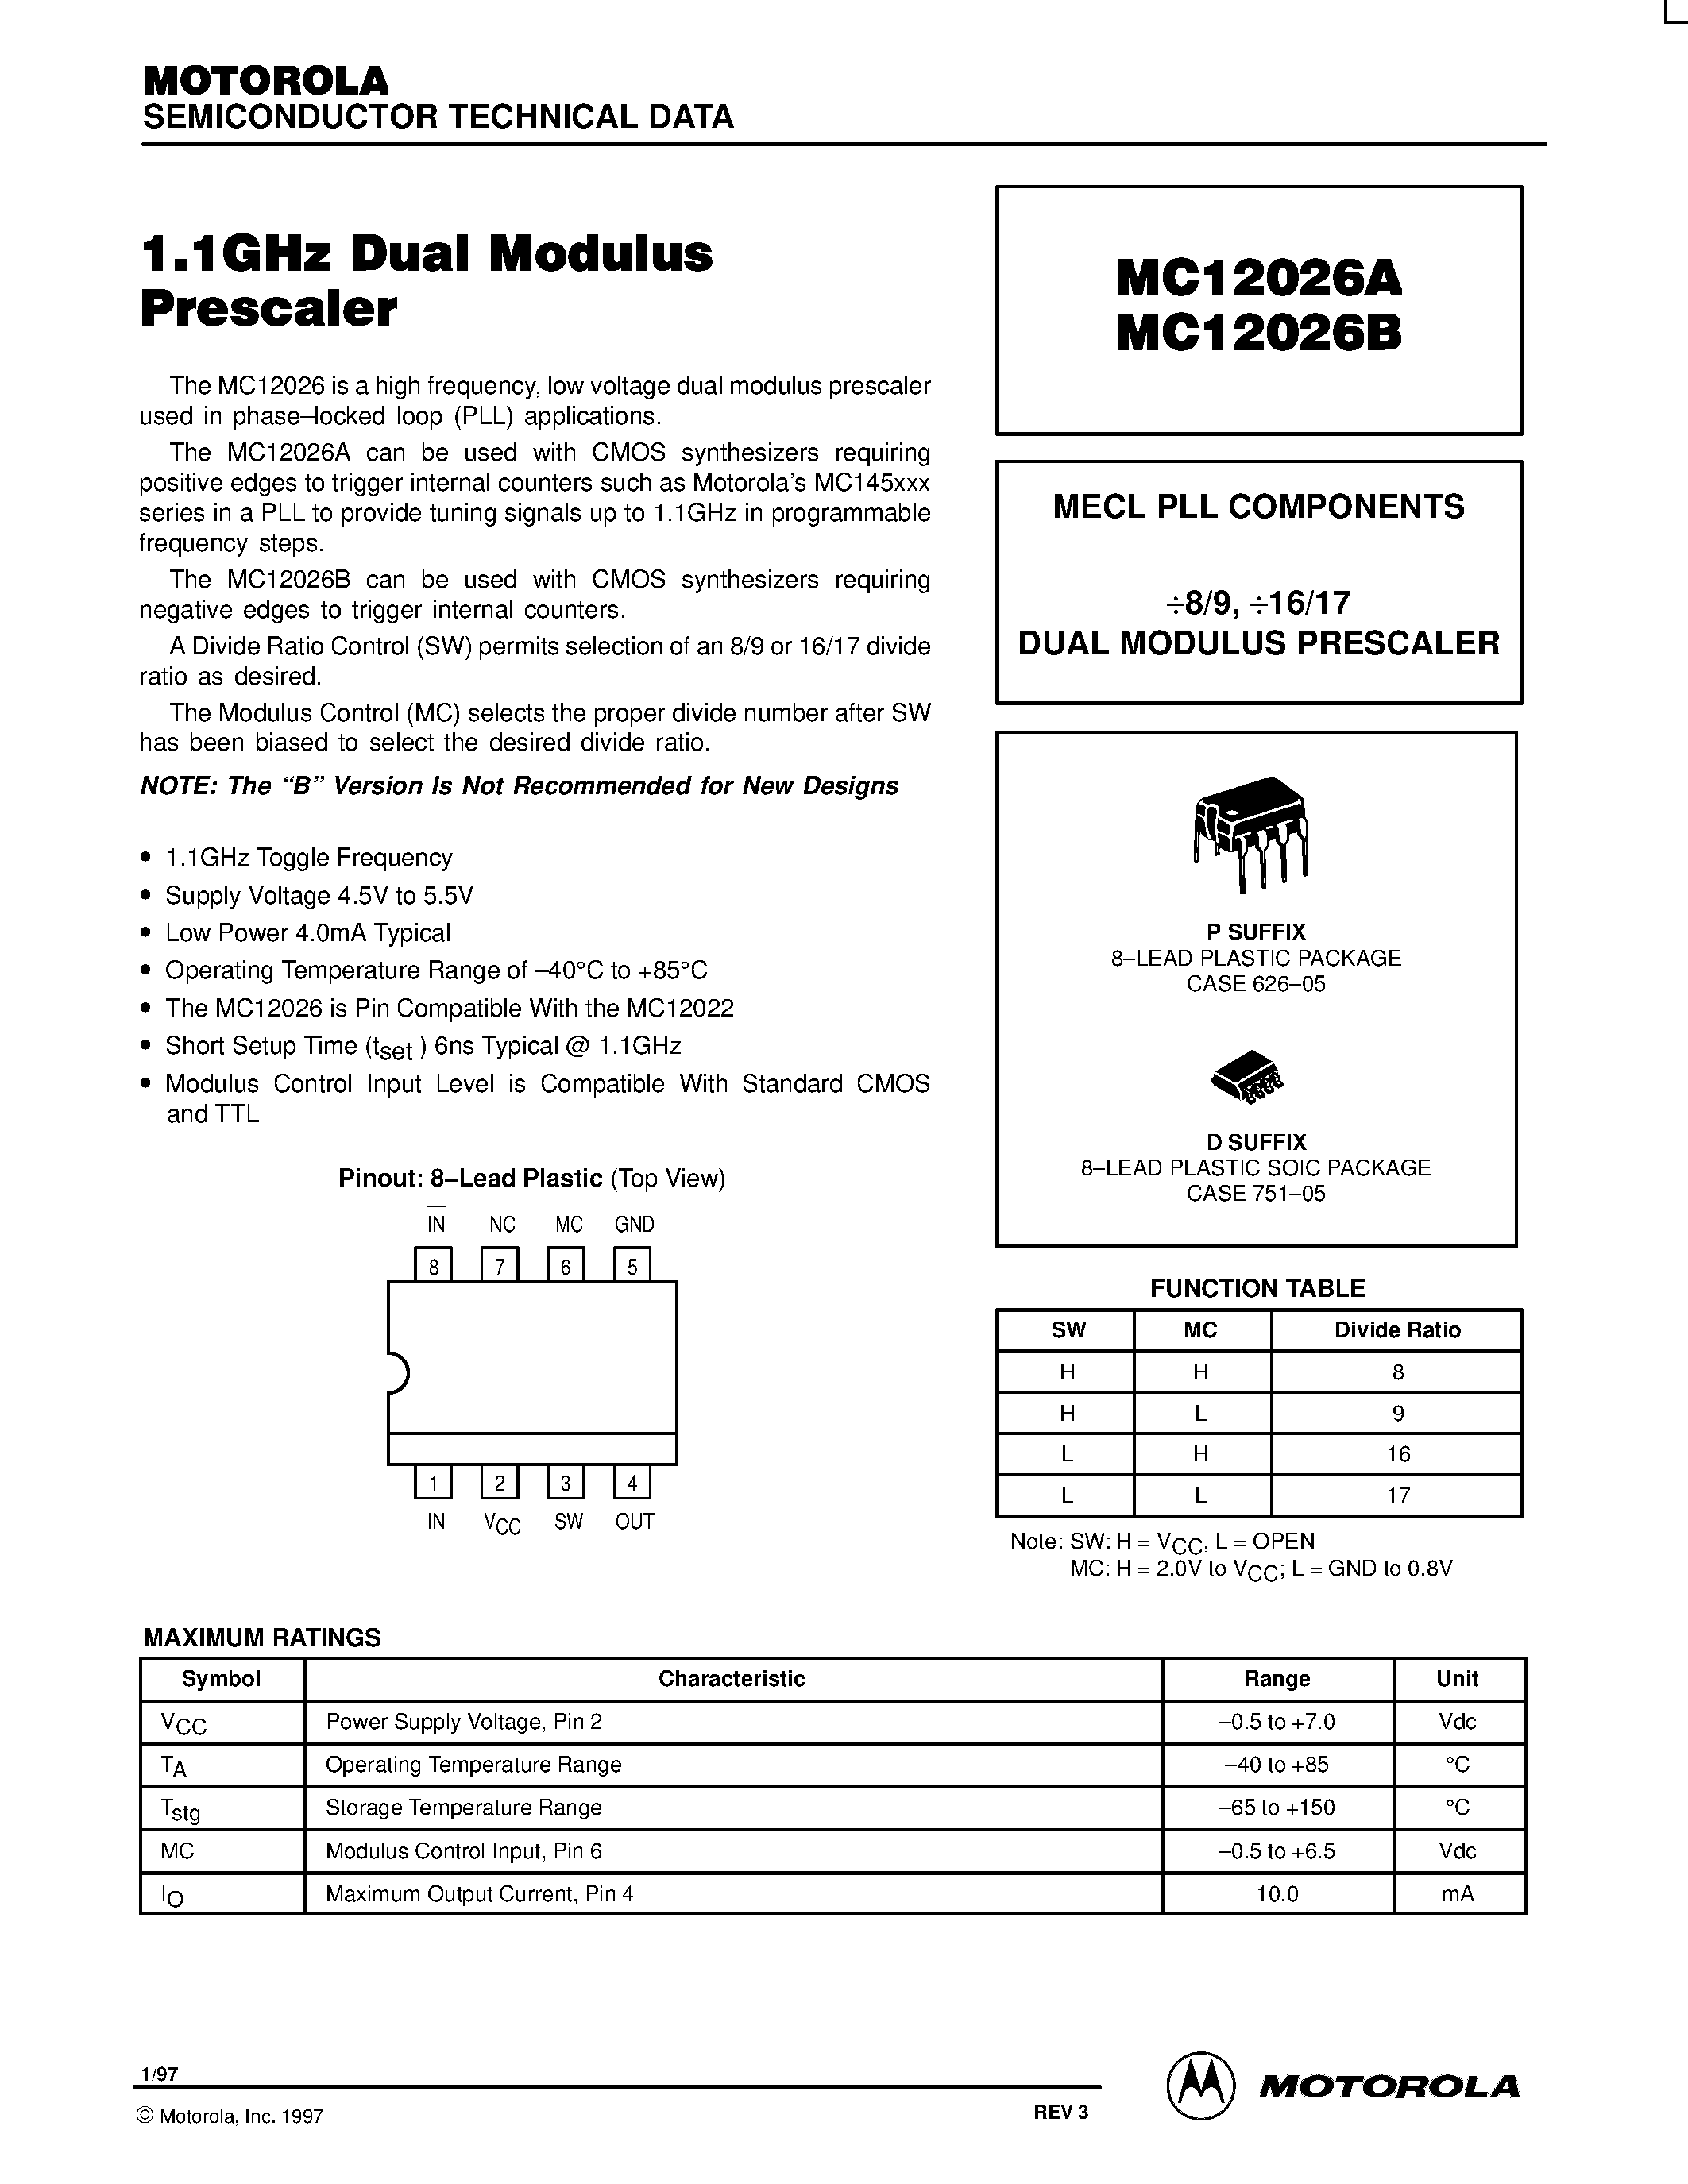 Datasheet MC12026BP - MECL PLL COMPONENTS 8/9 / 16/17 DUAL MODULUS PRESCALER page 1